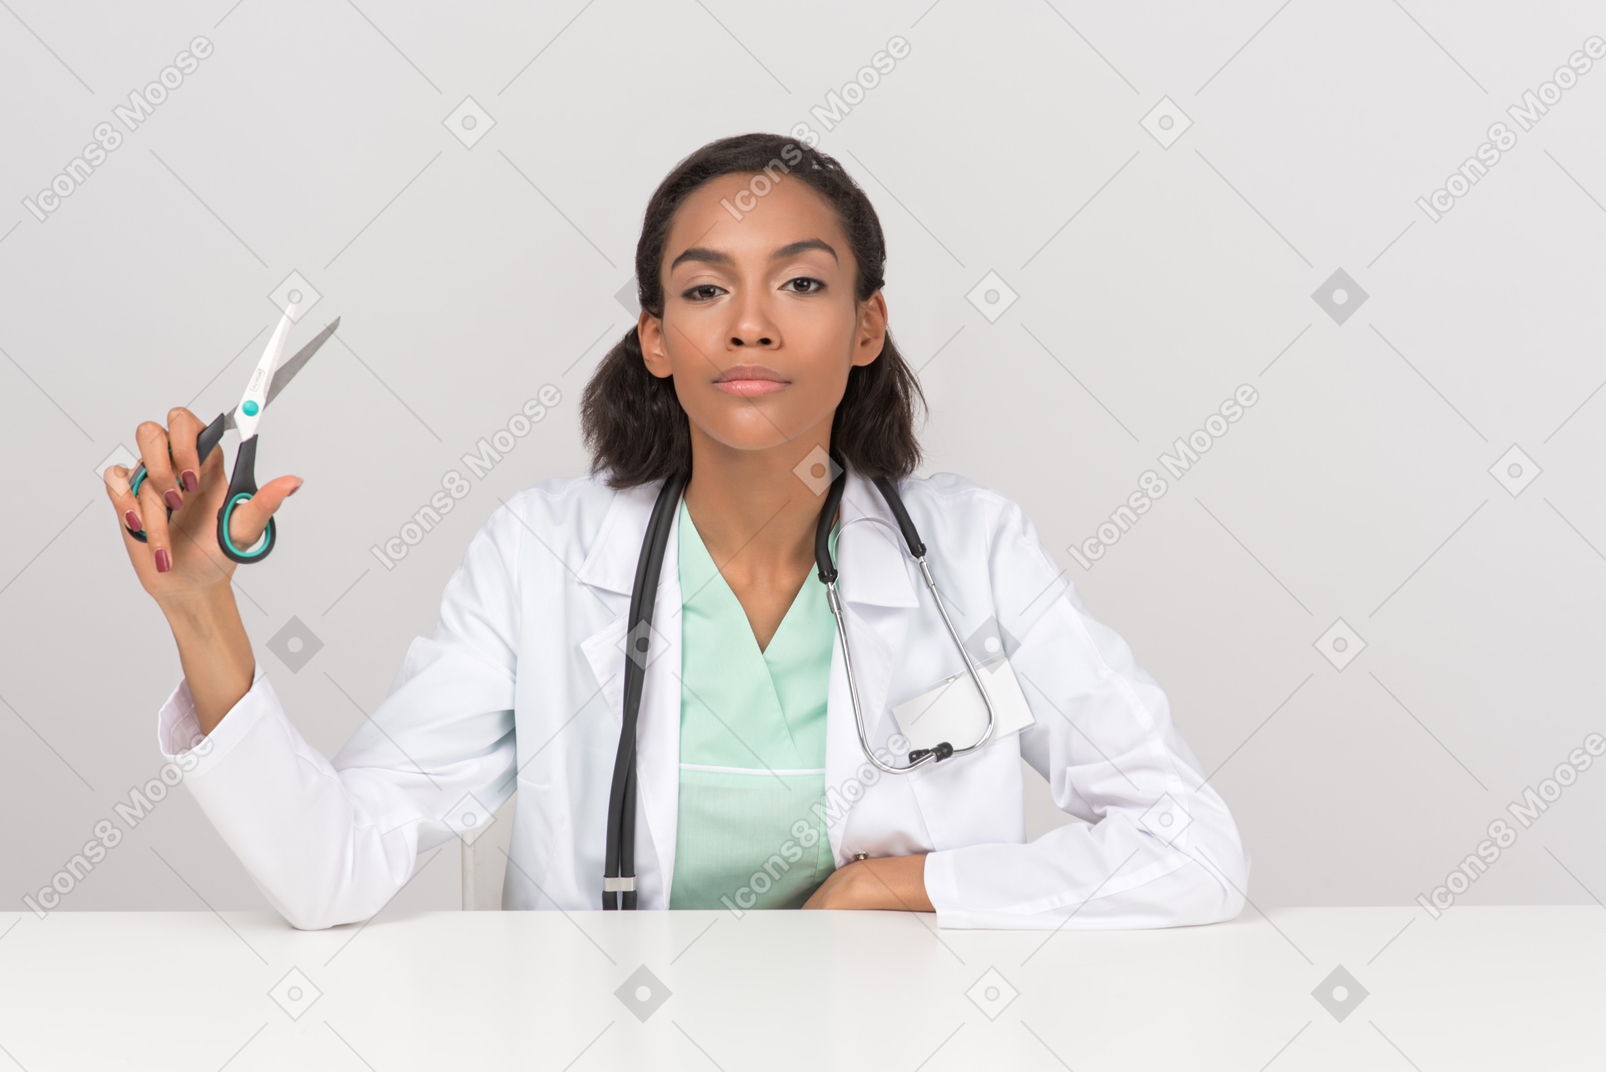 Beautiful female doctor holding scissors